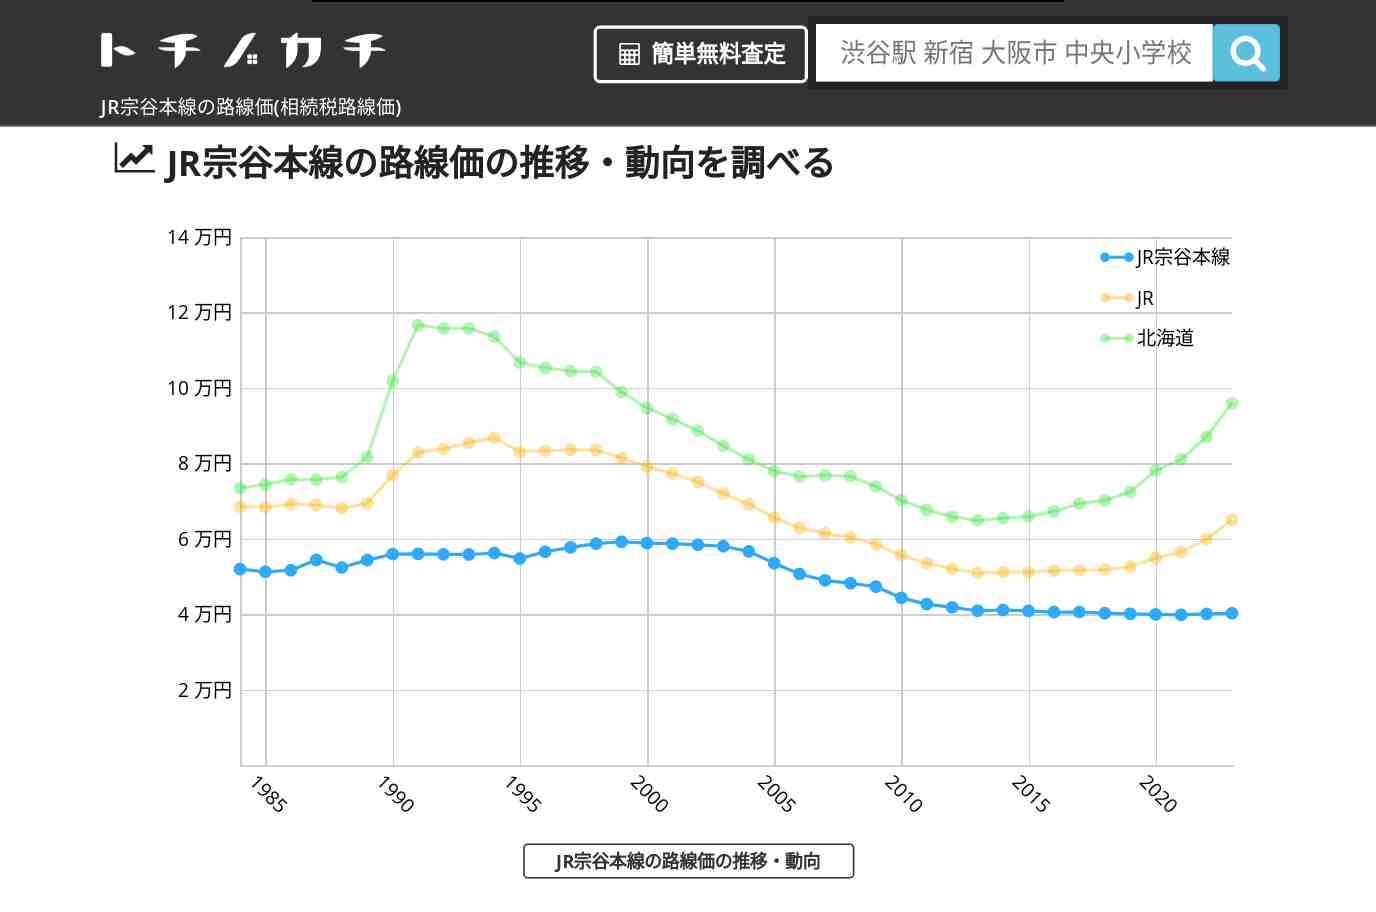 JR宗谷本線(JR)の路線価(相続税路線価) | トチノカチ